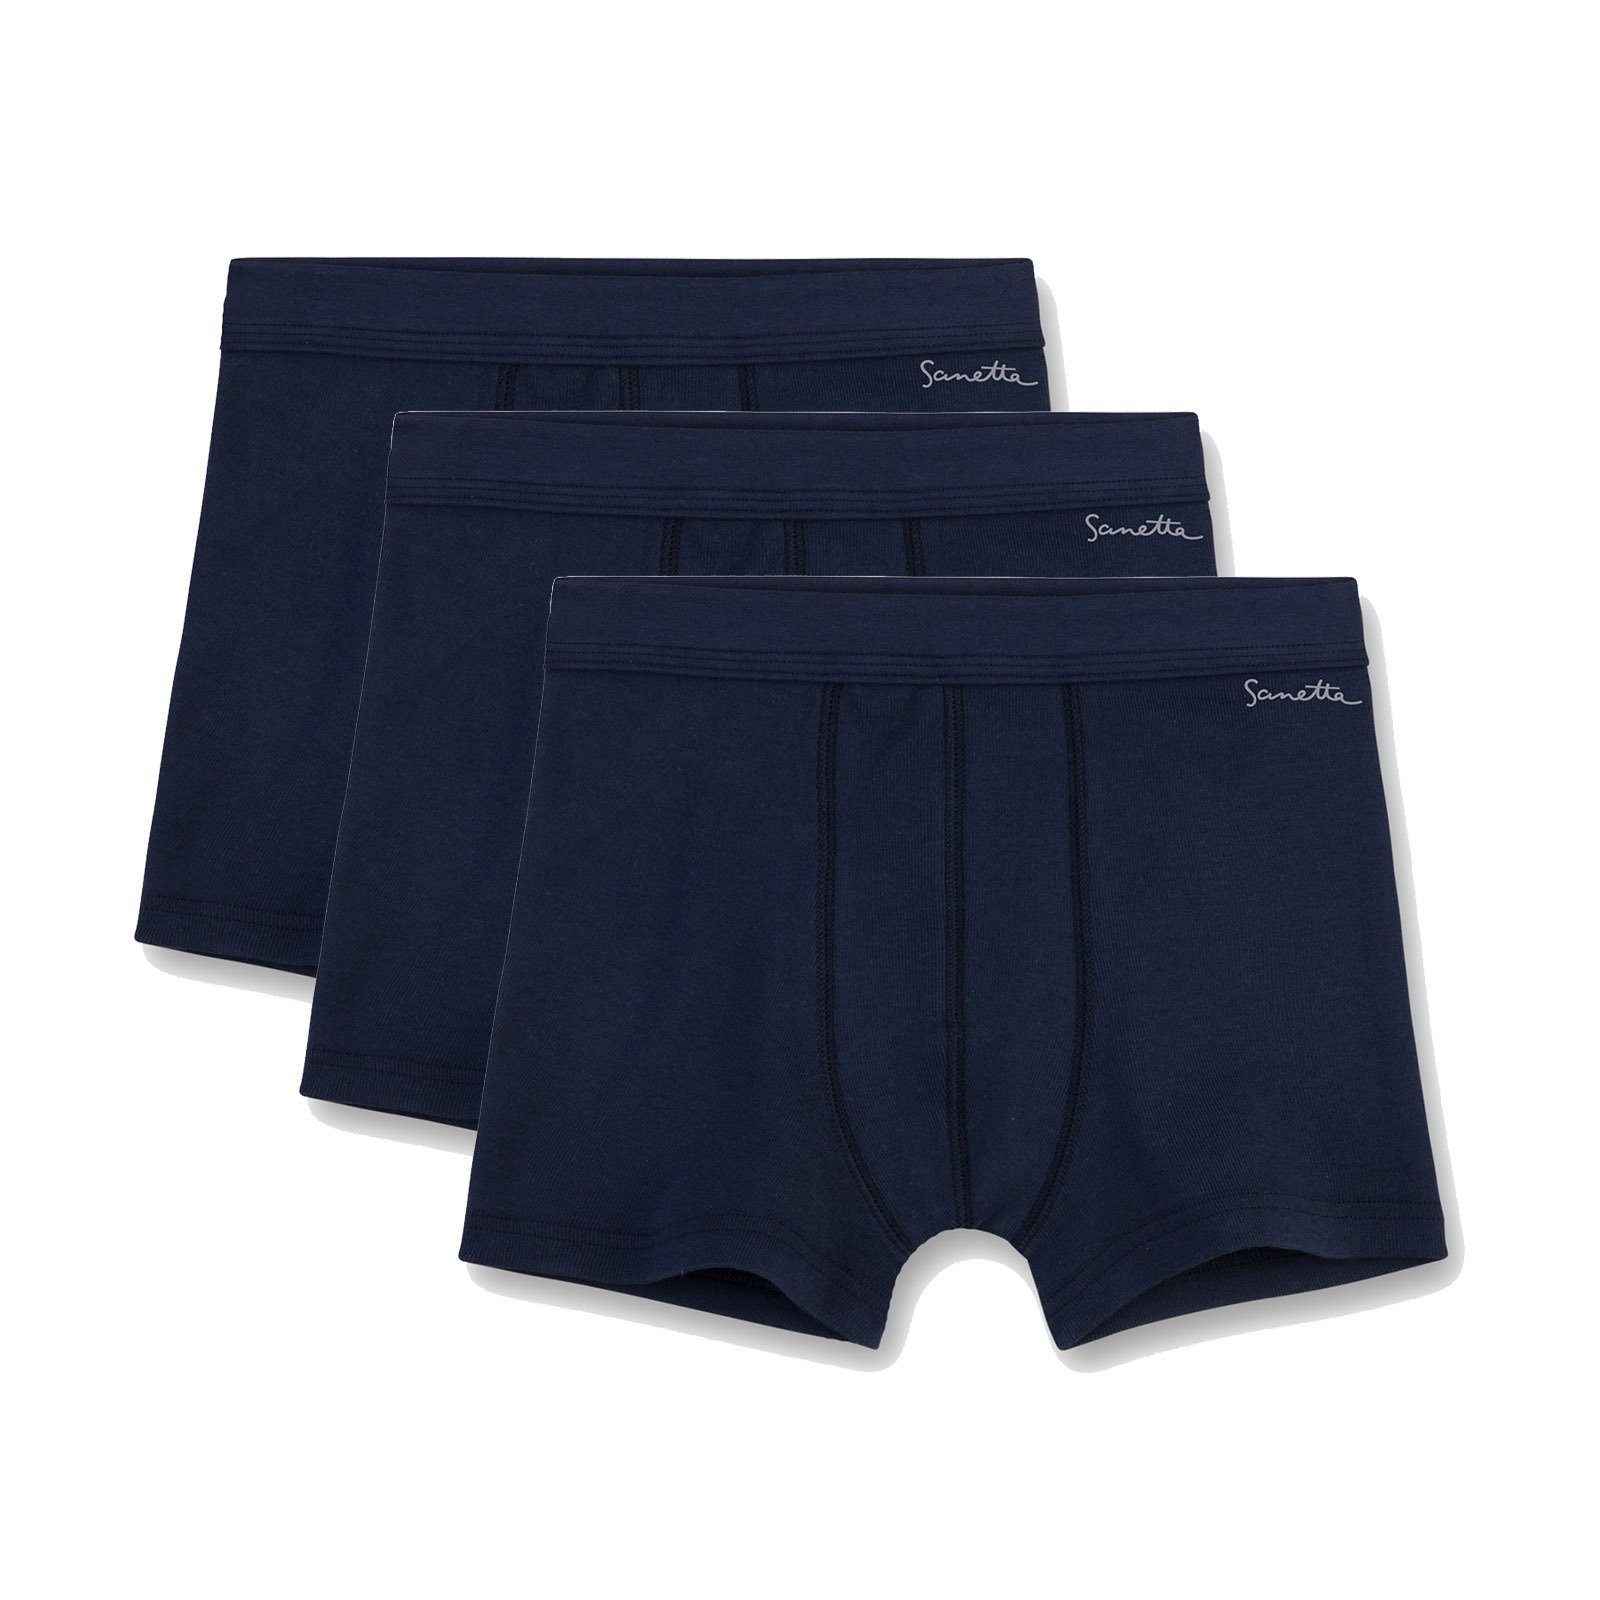 Sanetta Boxer Jungen Shorts 3er Pack - Pant, Unterhose, Organic